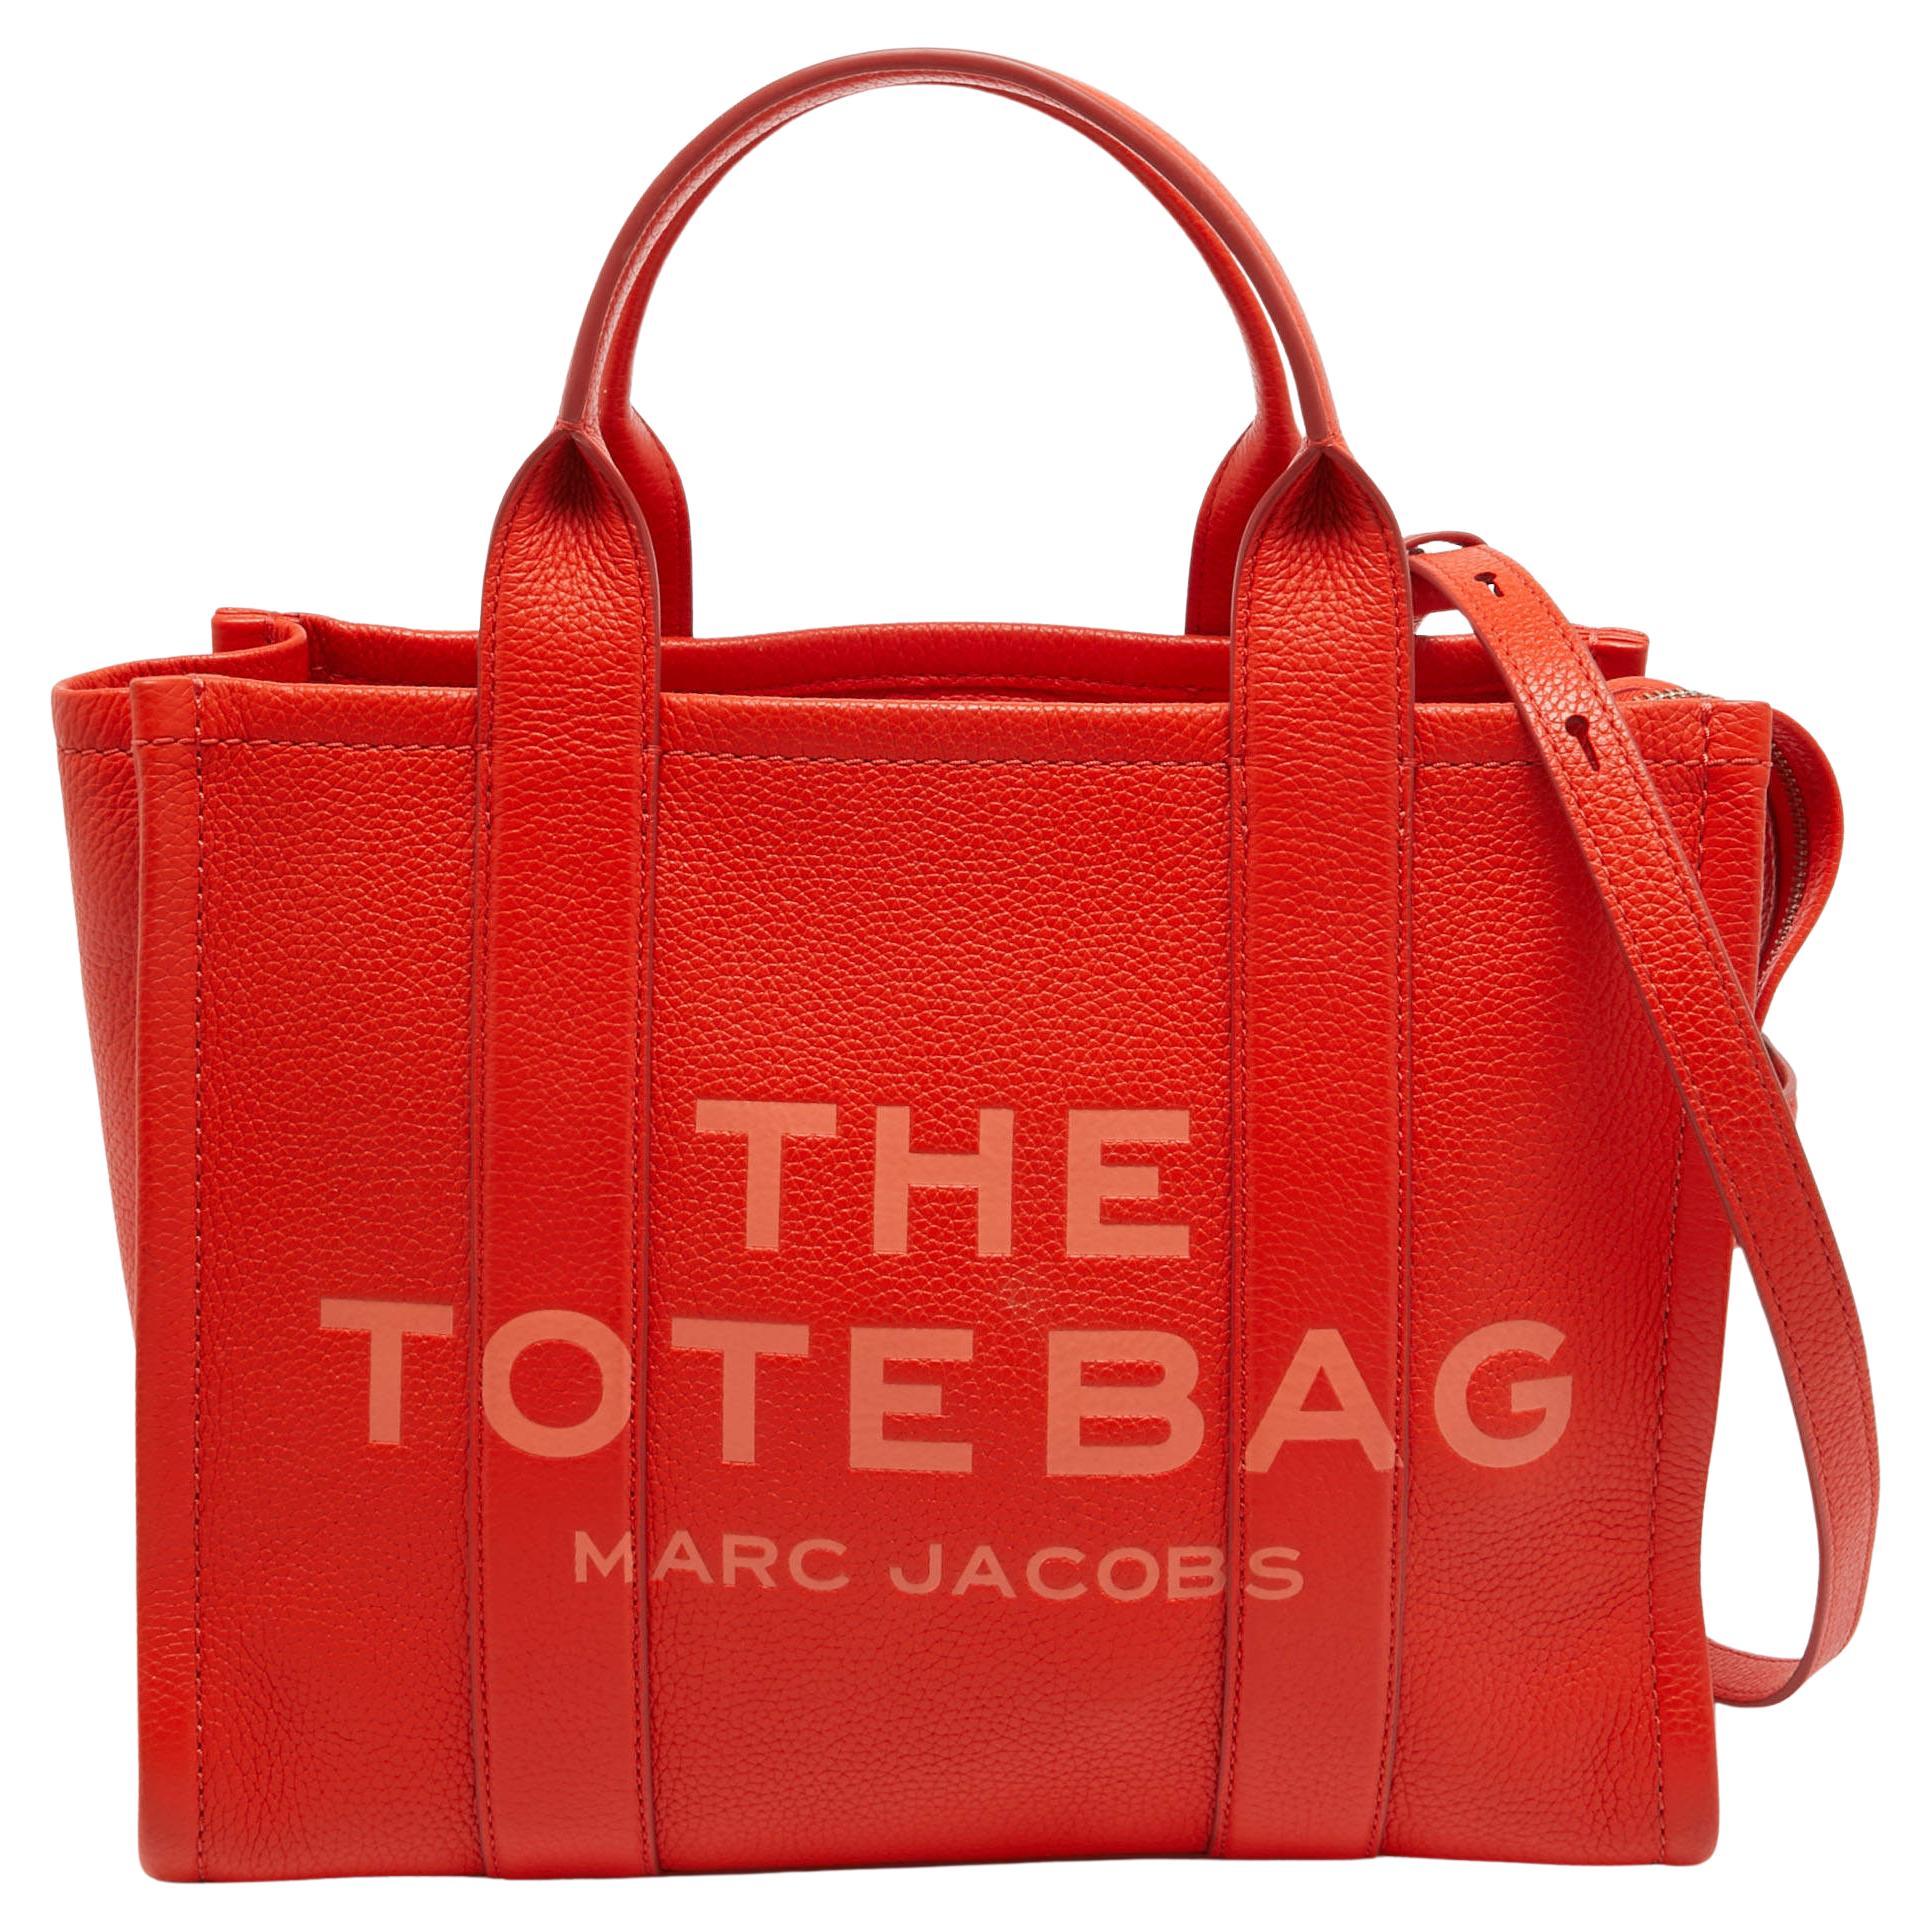 How do I authenticate a Marc Jacobs Snapshot bag?